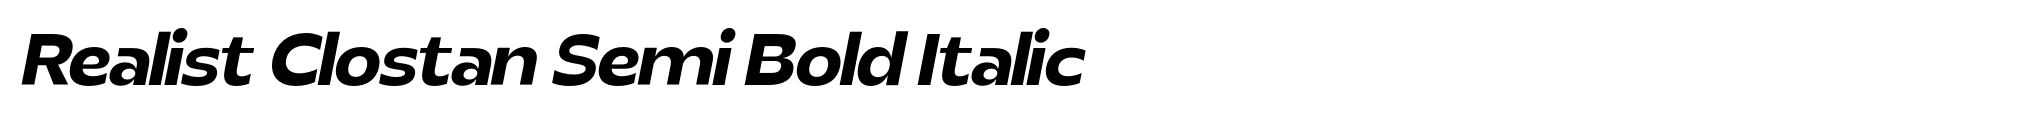 Realist Clostan Semi Bold Italic image